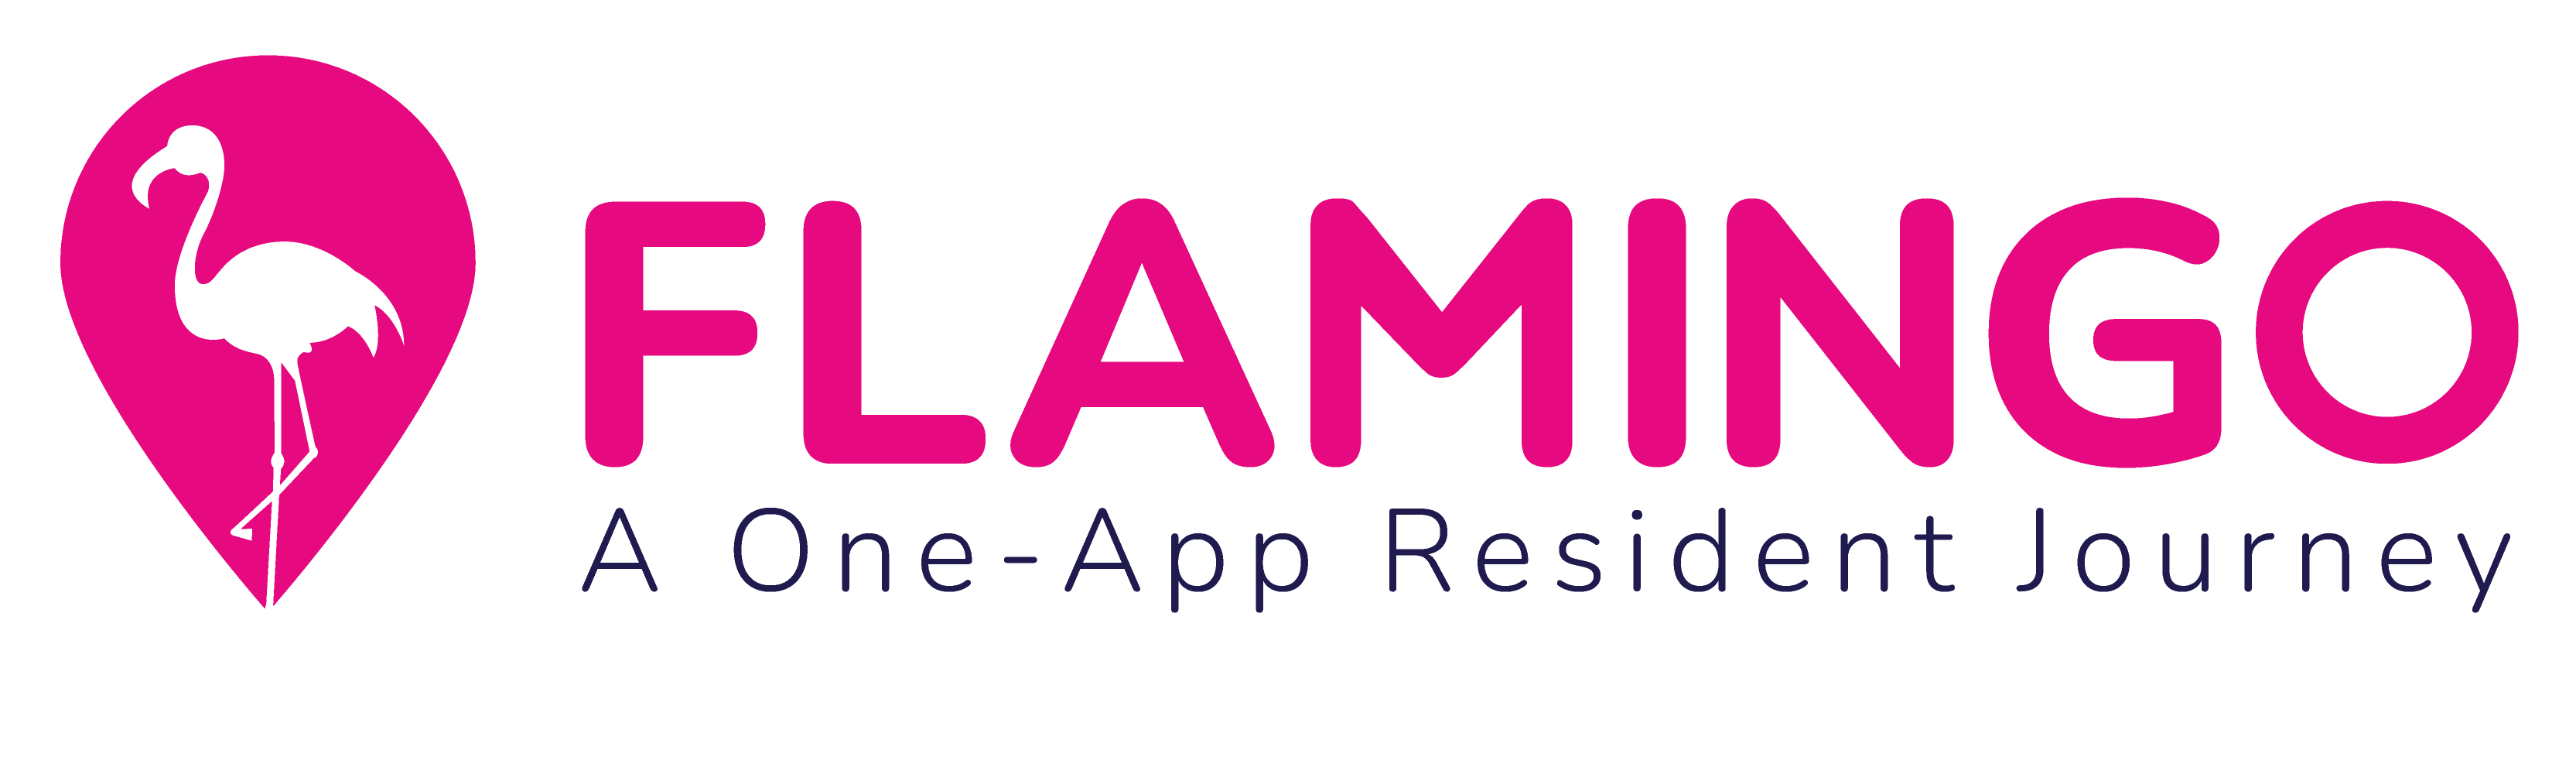 flamingo-one-app-large-trans